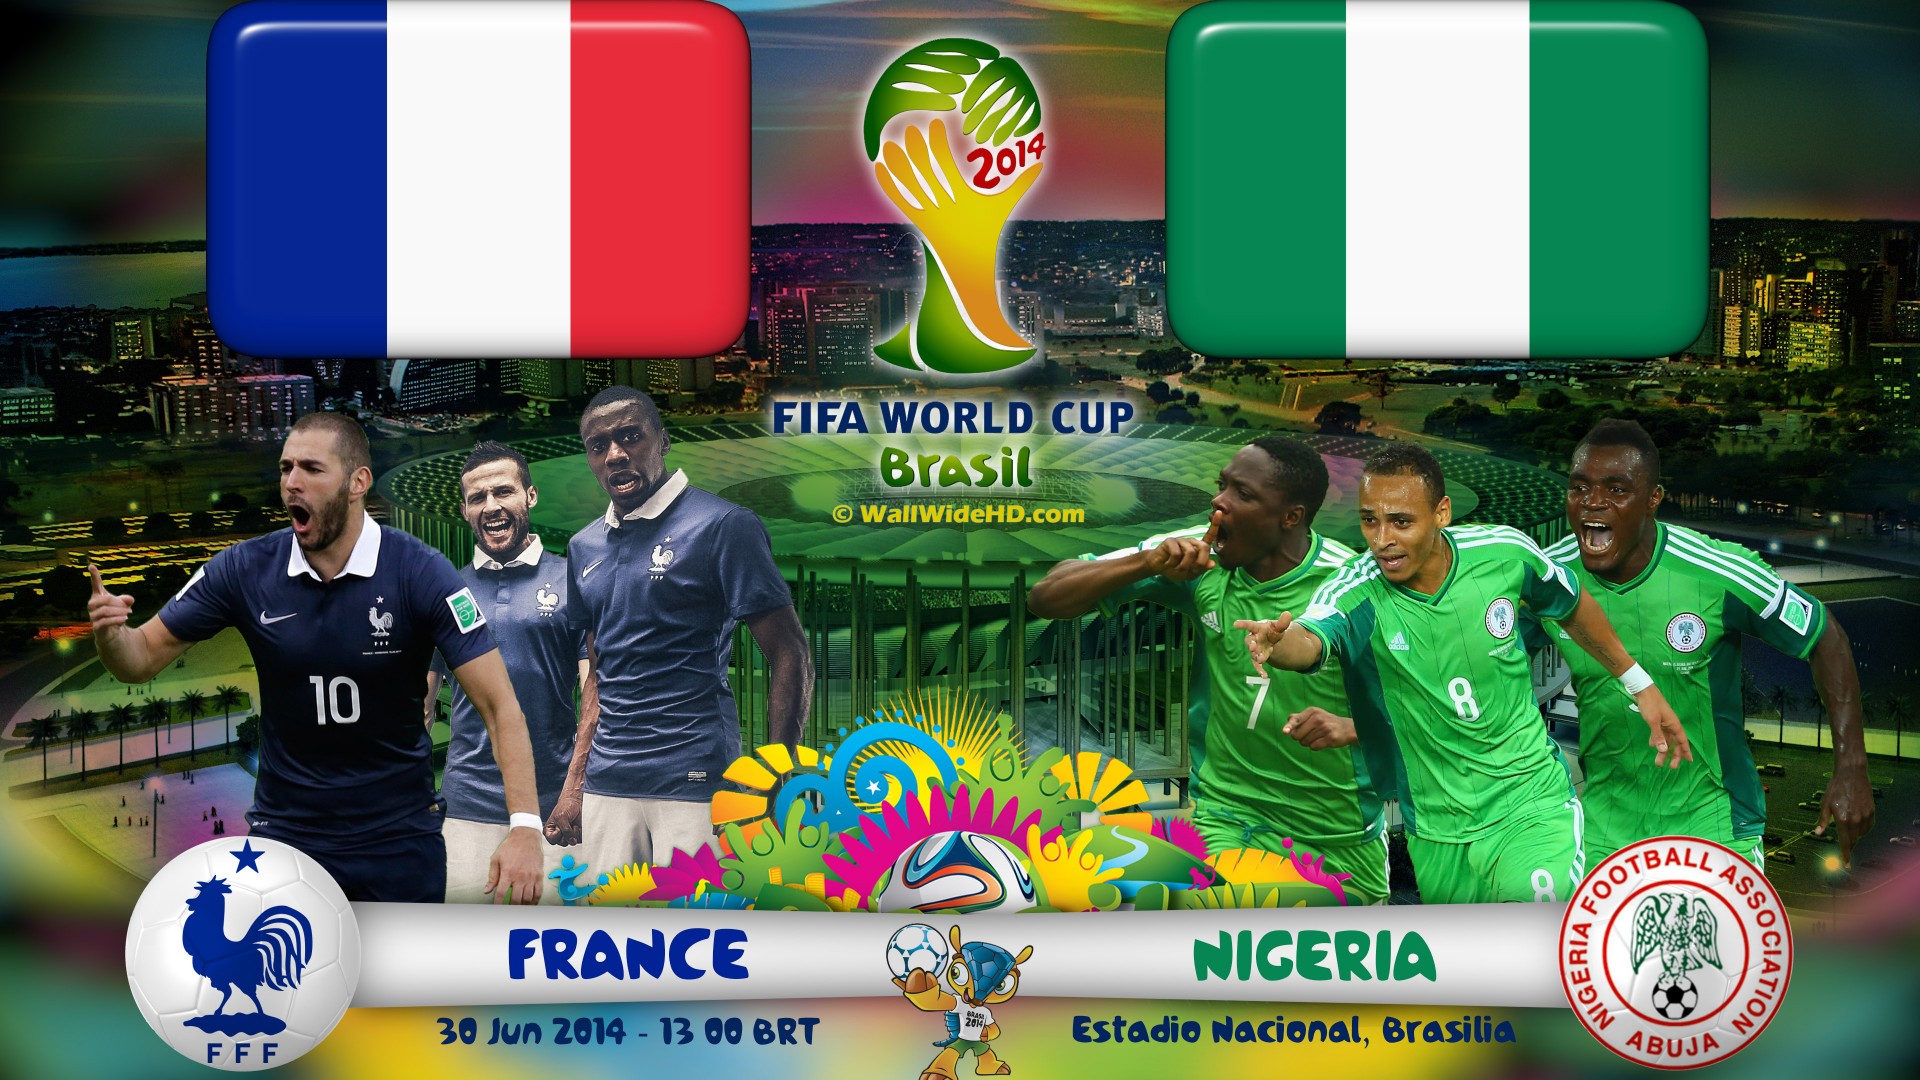 France-vs-Nigeria-World-Cup-2014-Round-Of-16-Football-Wallpaper-1080p.jpg